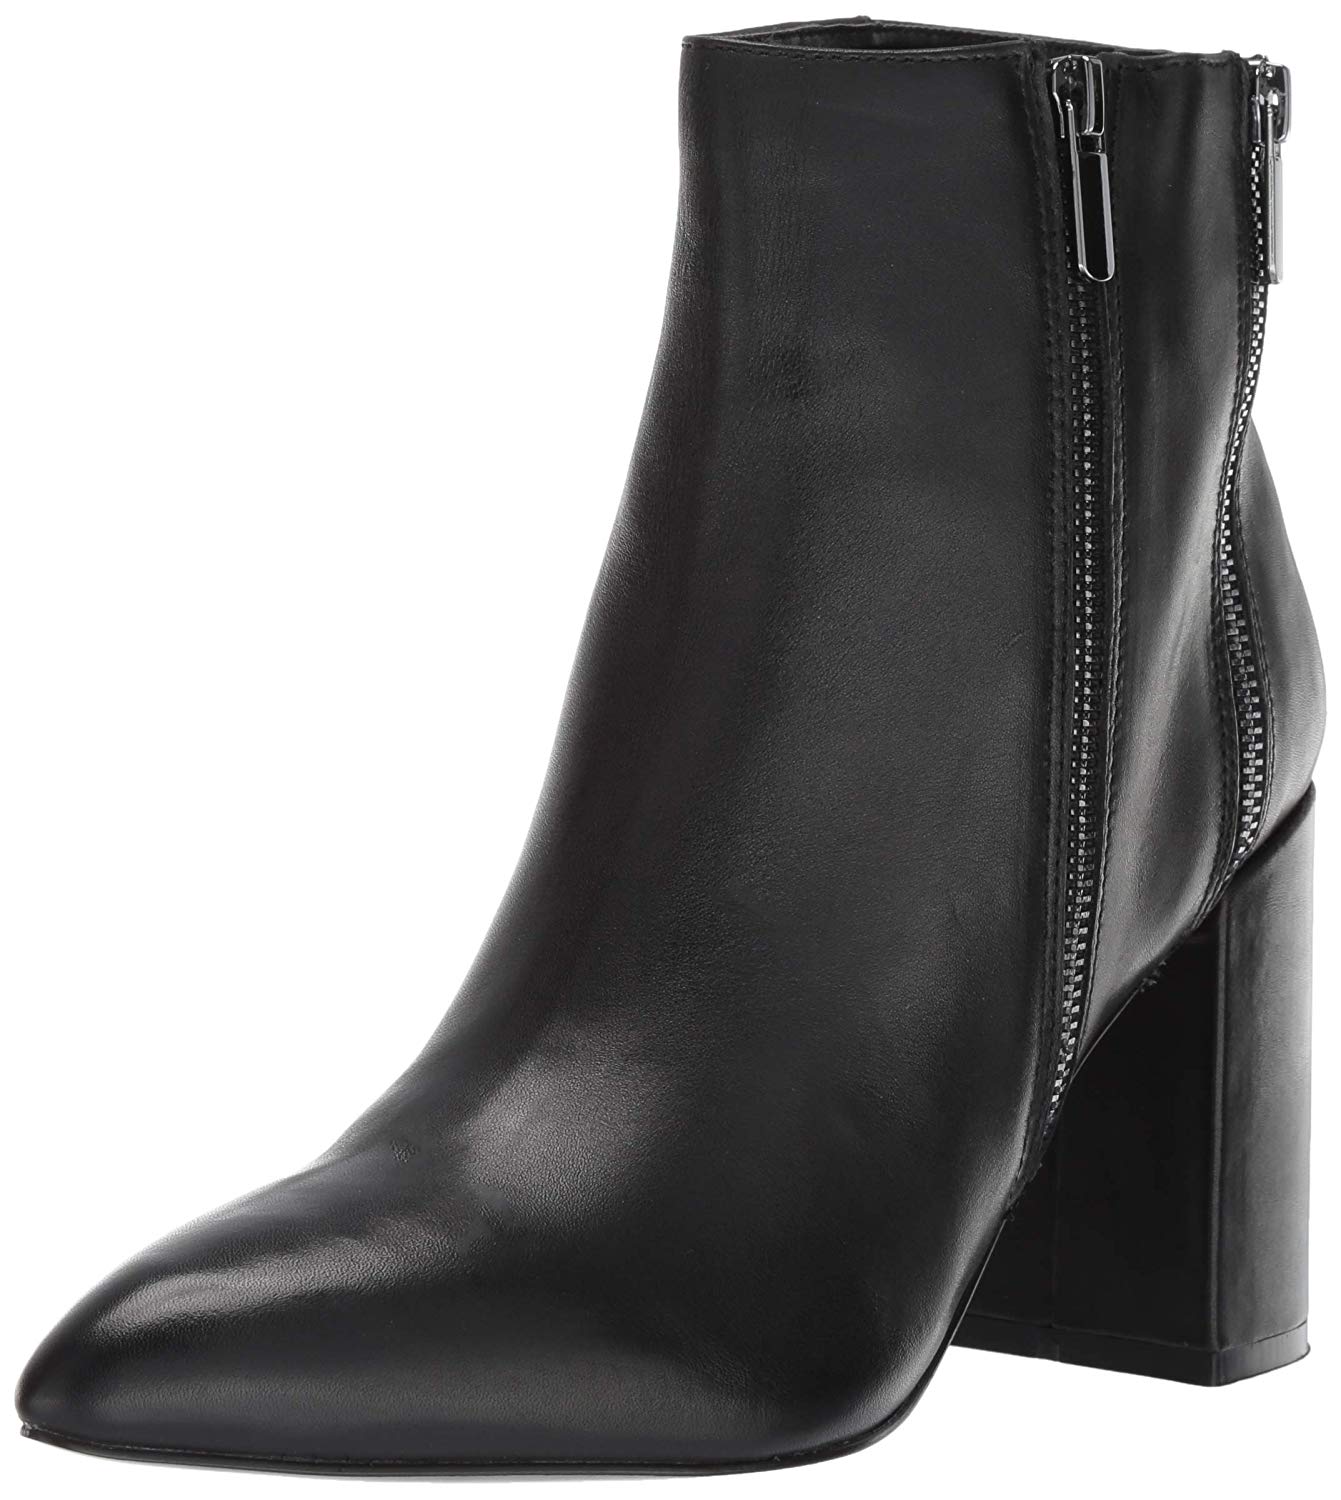 Fergie Women's Enigma Ankle Boot, Black, Size 8.5 vBJs | eBay